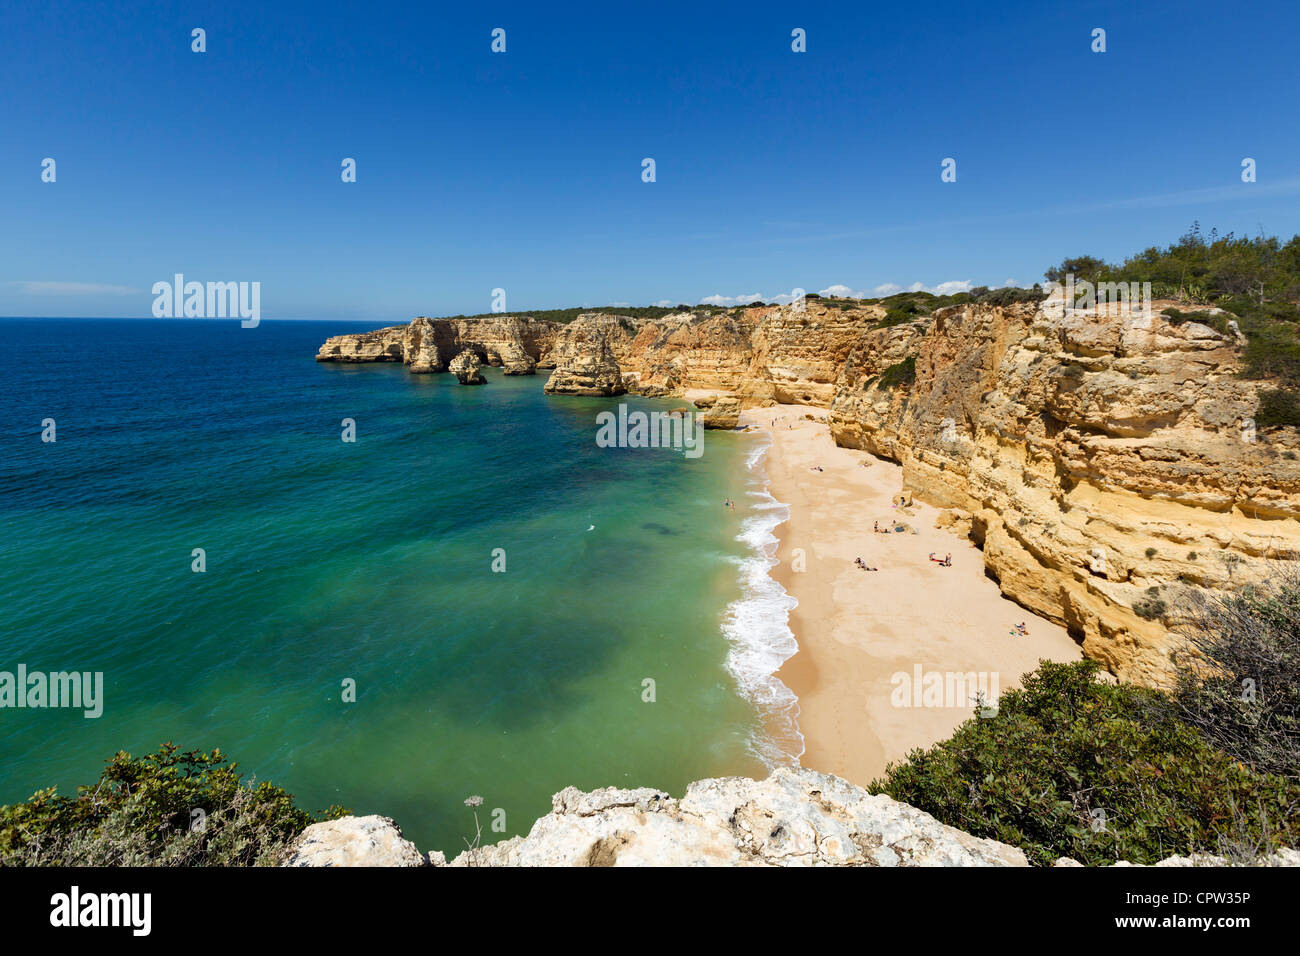 Praia da Marinha beach near Benagil, on the coast between Portimao and Albufeira, Algarve, Portugal Stock Photo